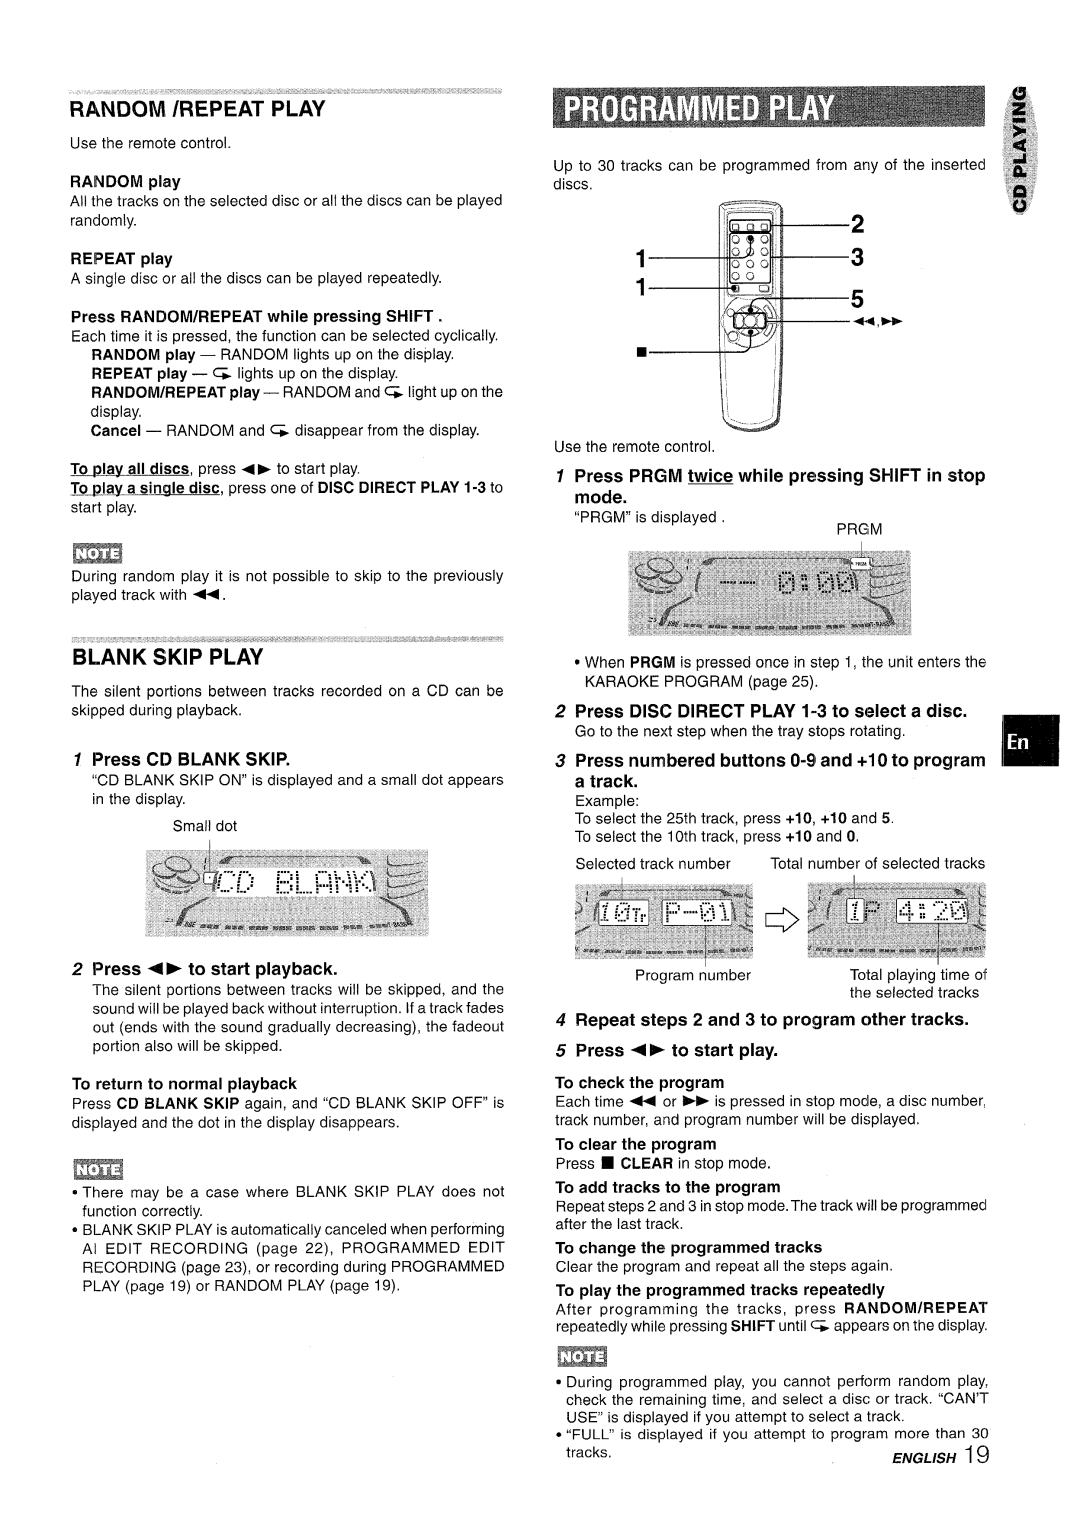 Sony NSX-A767 RANDOM iREPEAT PLAY”, BiANK SKIP”’-PLAY’”‘“”~‘“‘~, ‘“““ ““’ ““”, Press 4E to start playback, 4P to start 